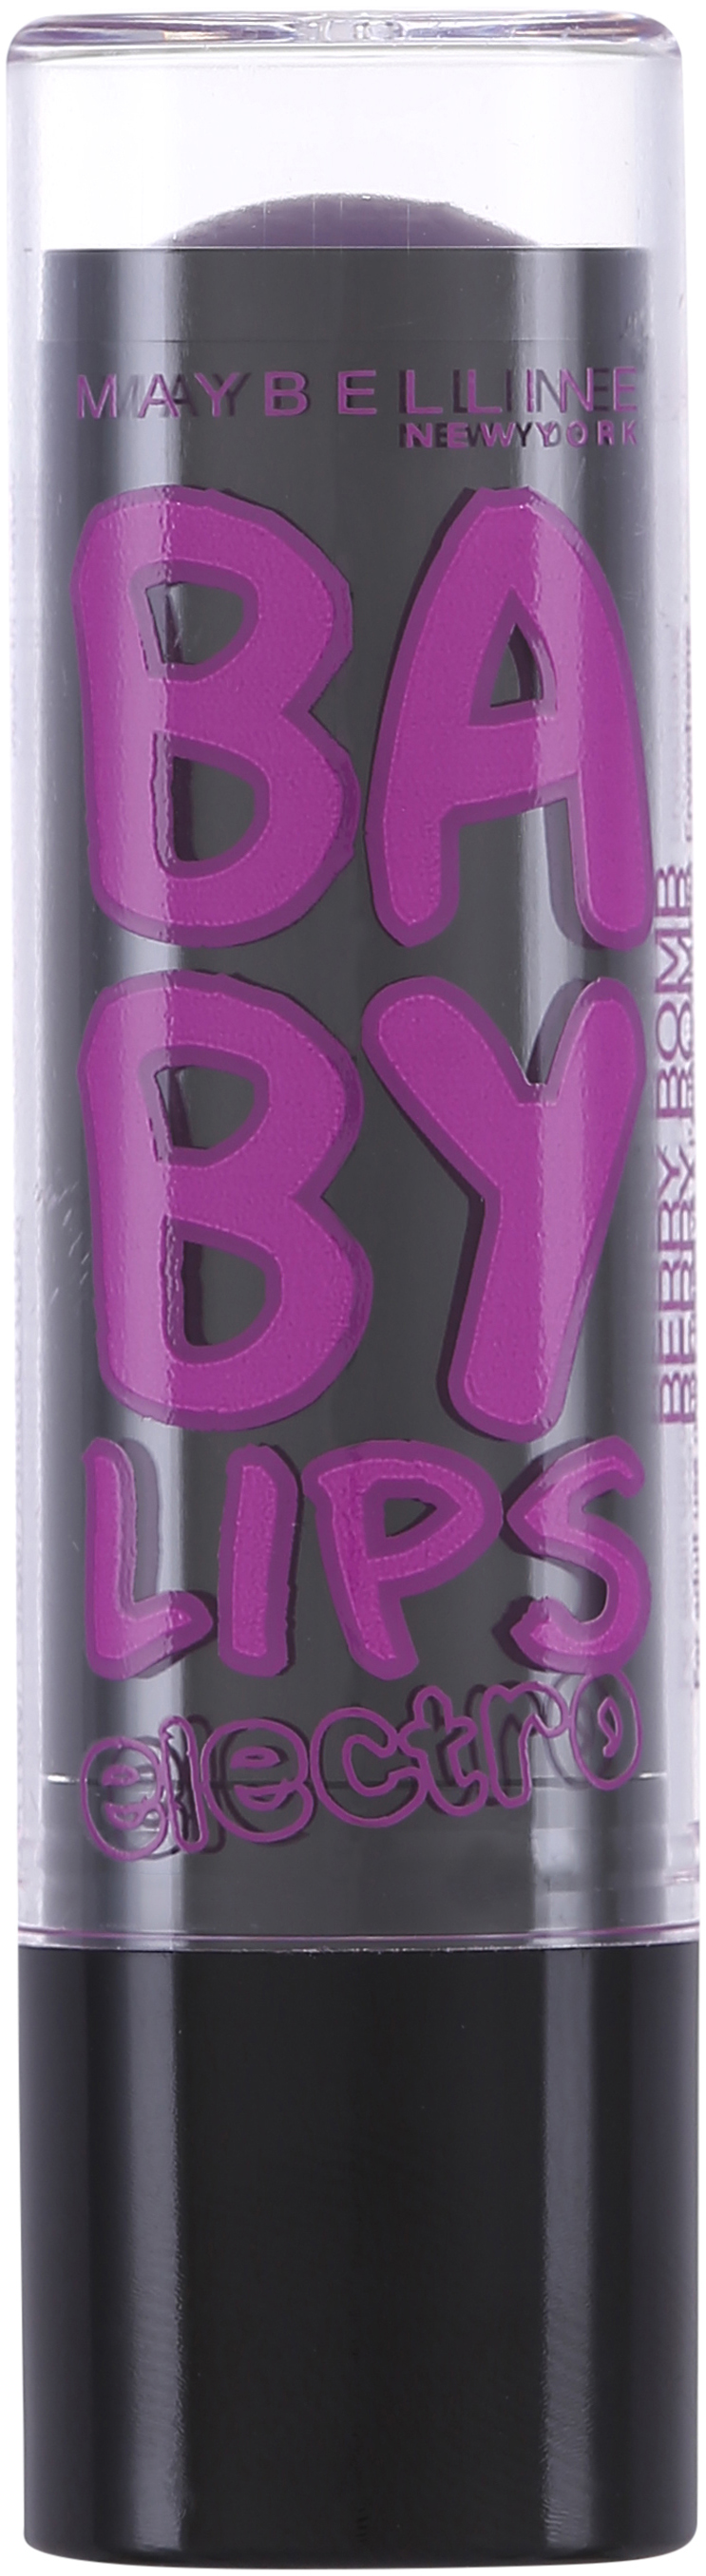 Maybelline Baby Lips Electro Berry Bomb